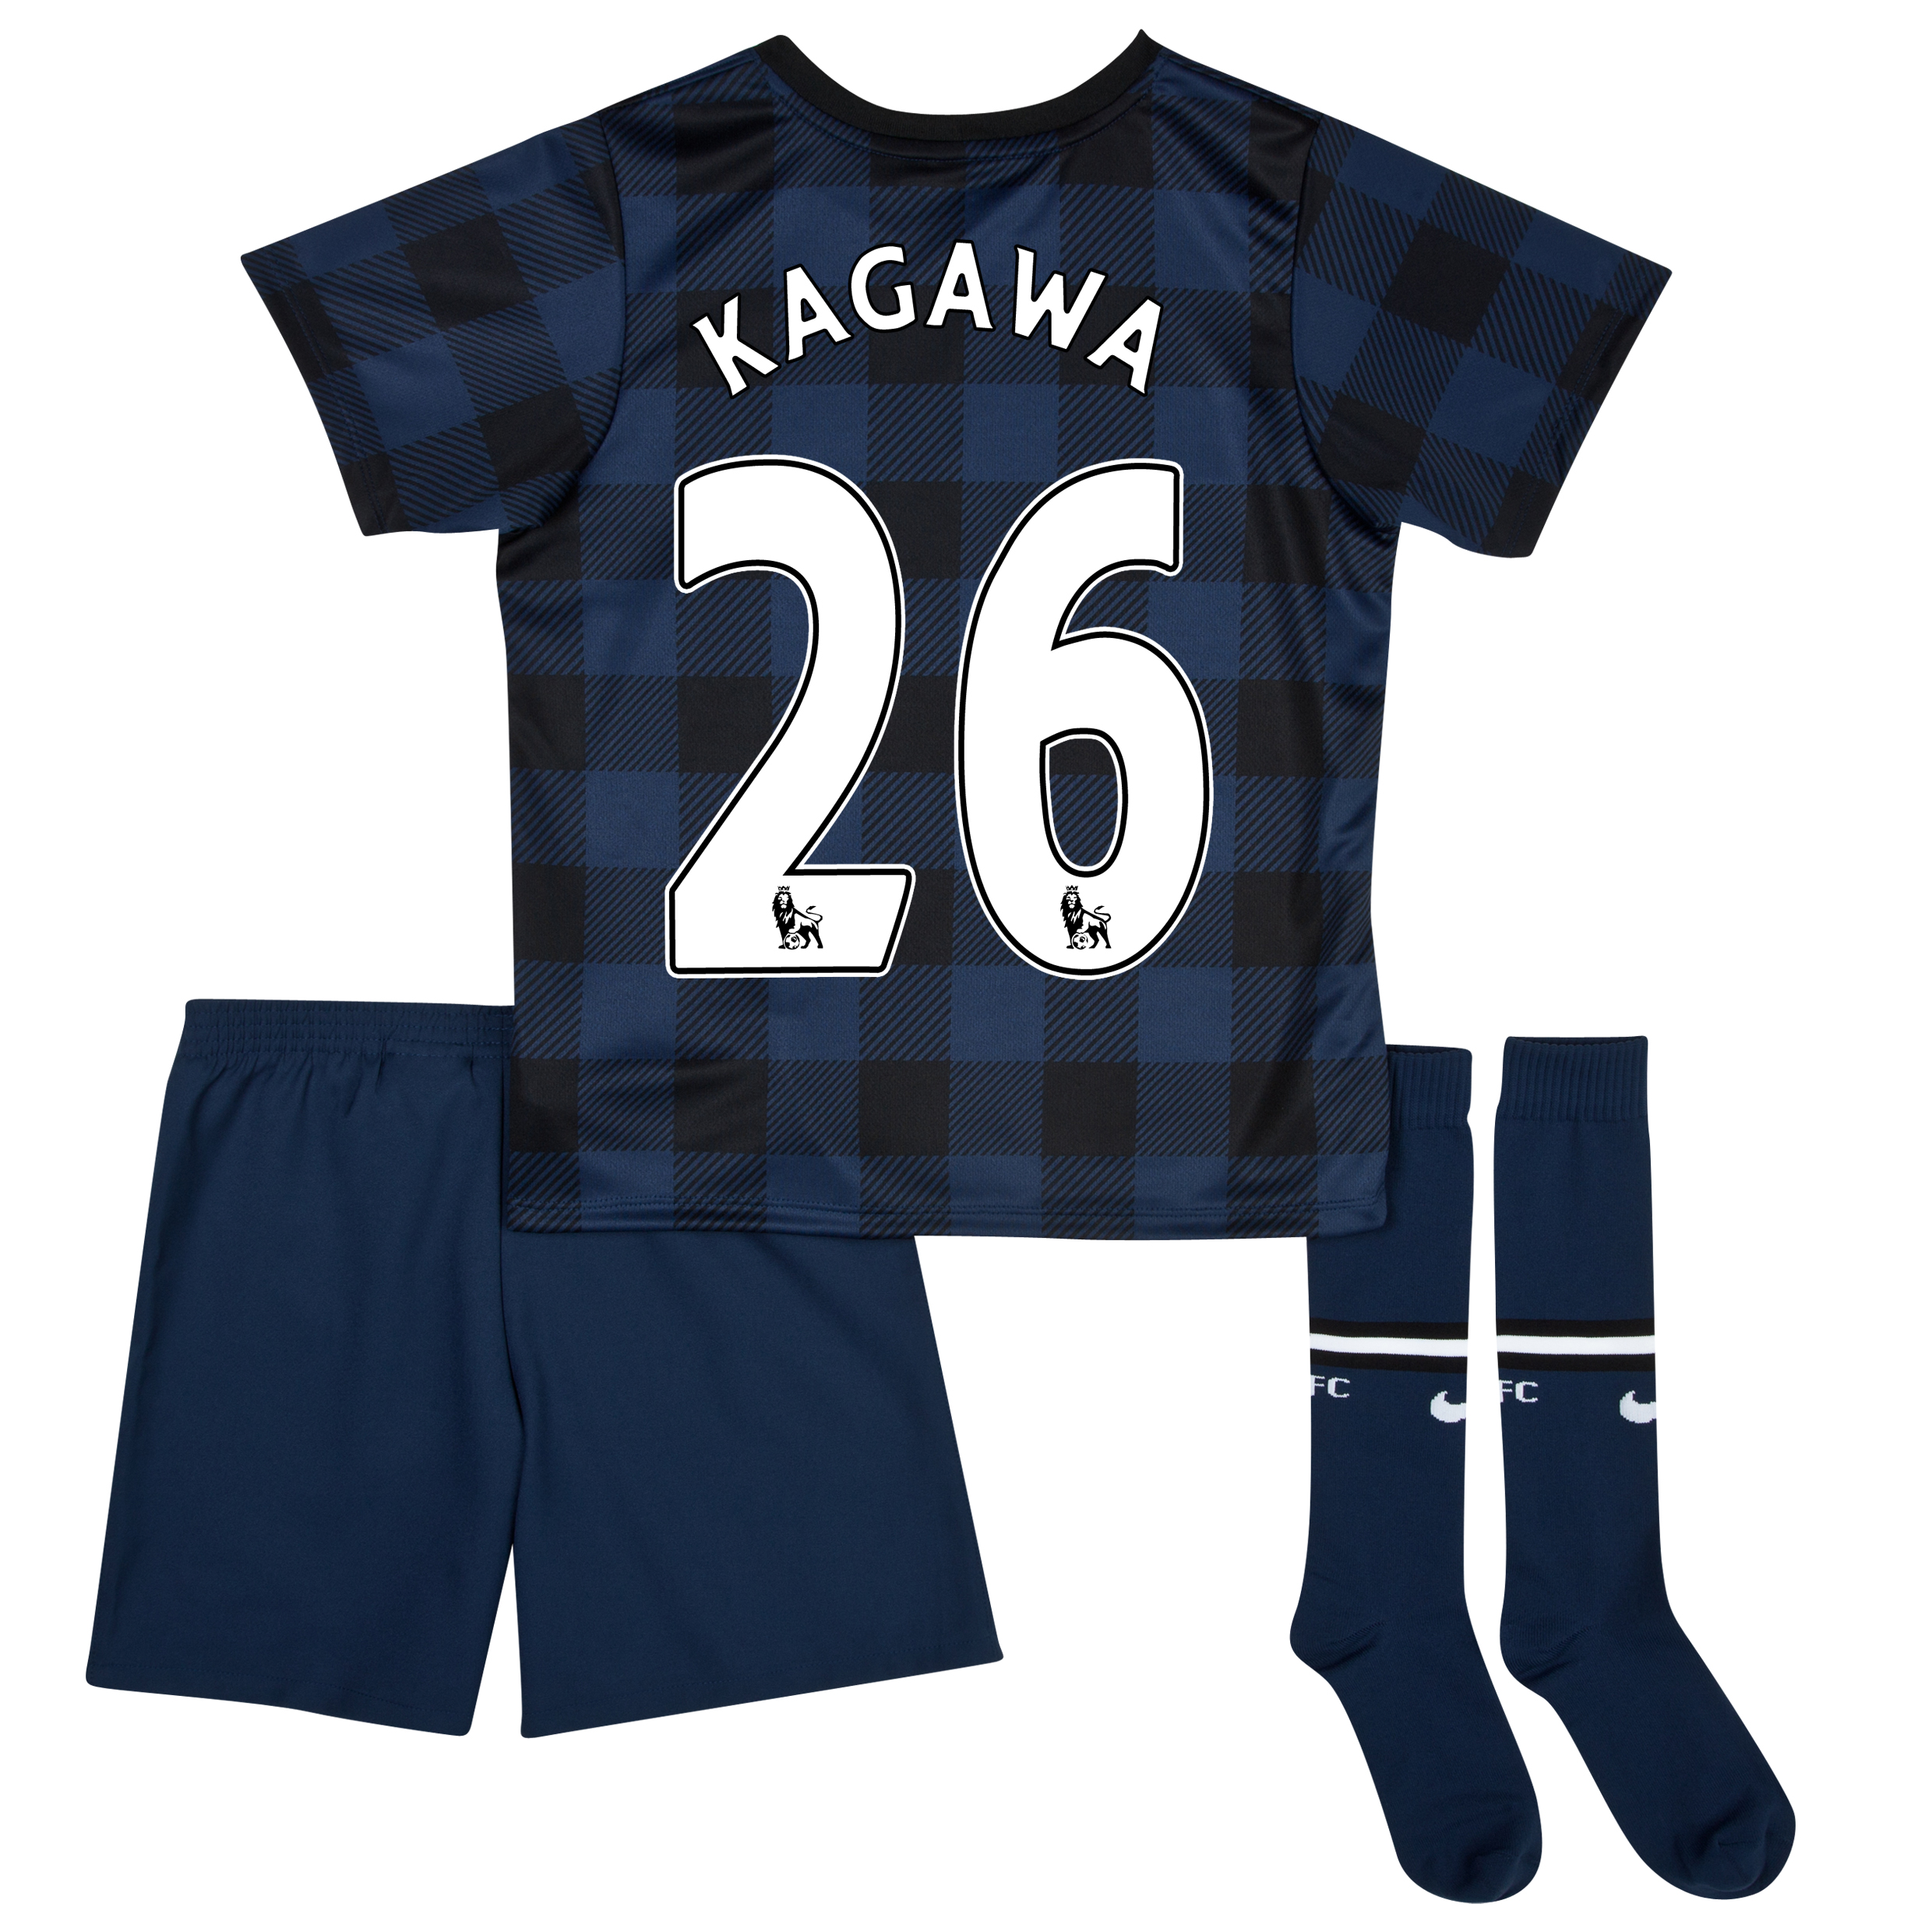 Manchester United Away Kit 2013/14 - Little Boys with Kagawa 26 printing